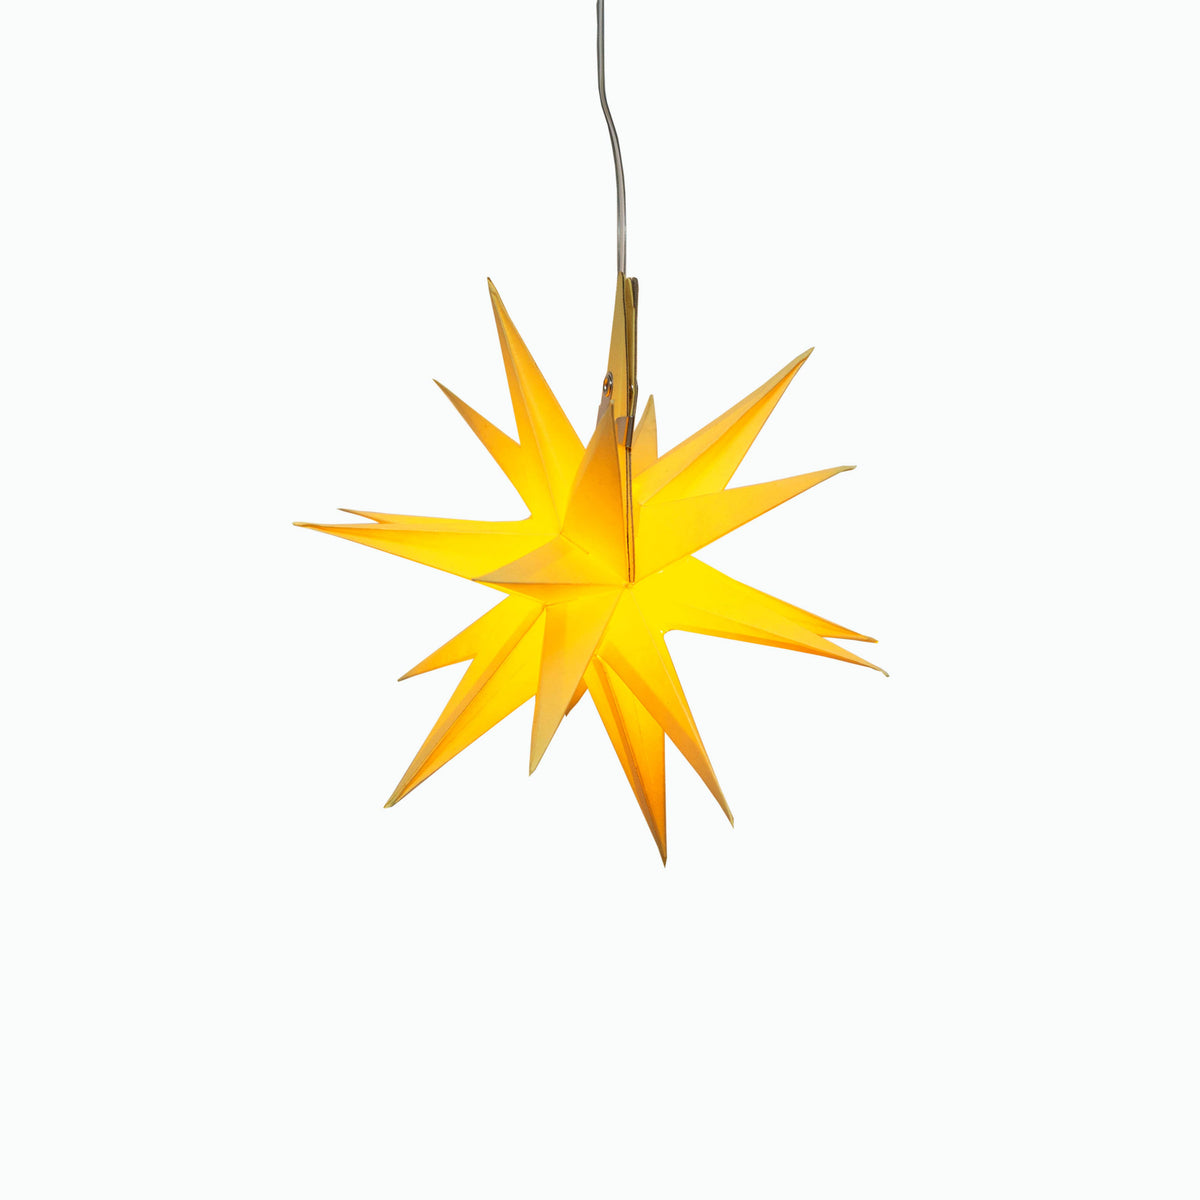 Moravian Mini Star ~ 7 inch, Yellow Paper Star Lantern Light